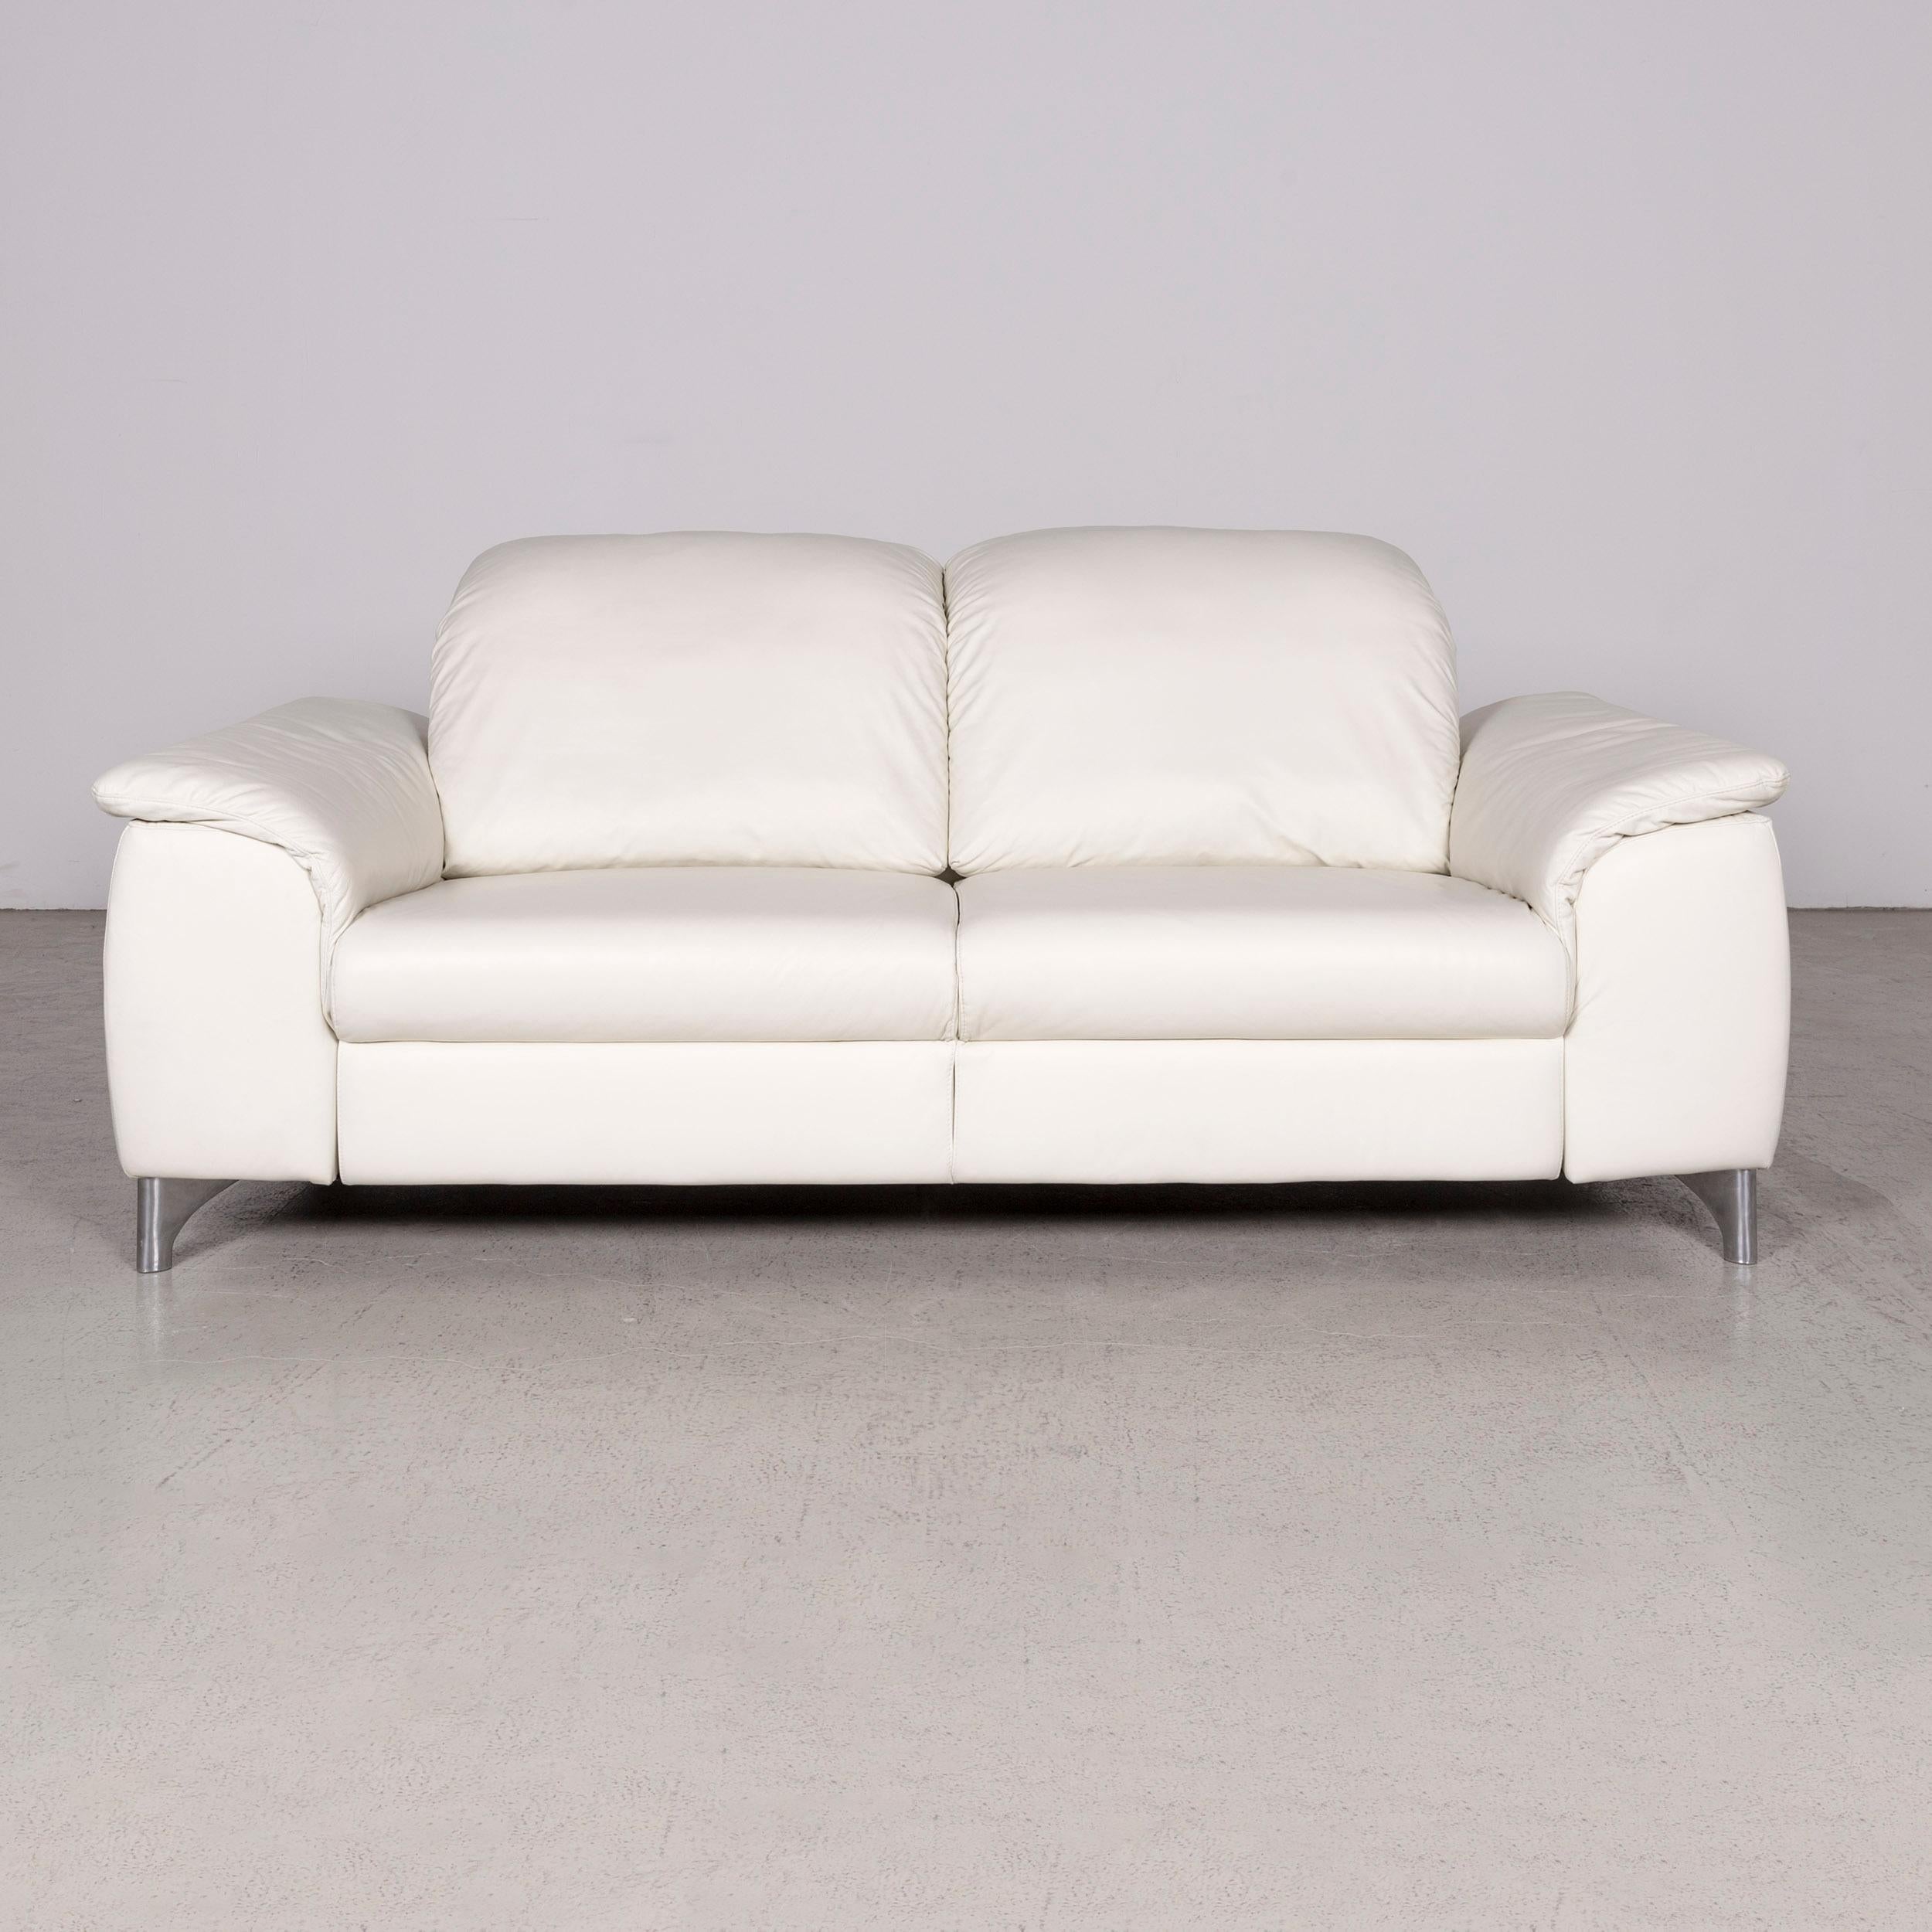 Modern Willi Schillig Sinaatra Designer Leather Sofa White Genuine Leather Two-Seat For Sale